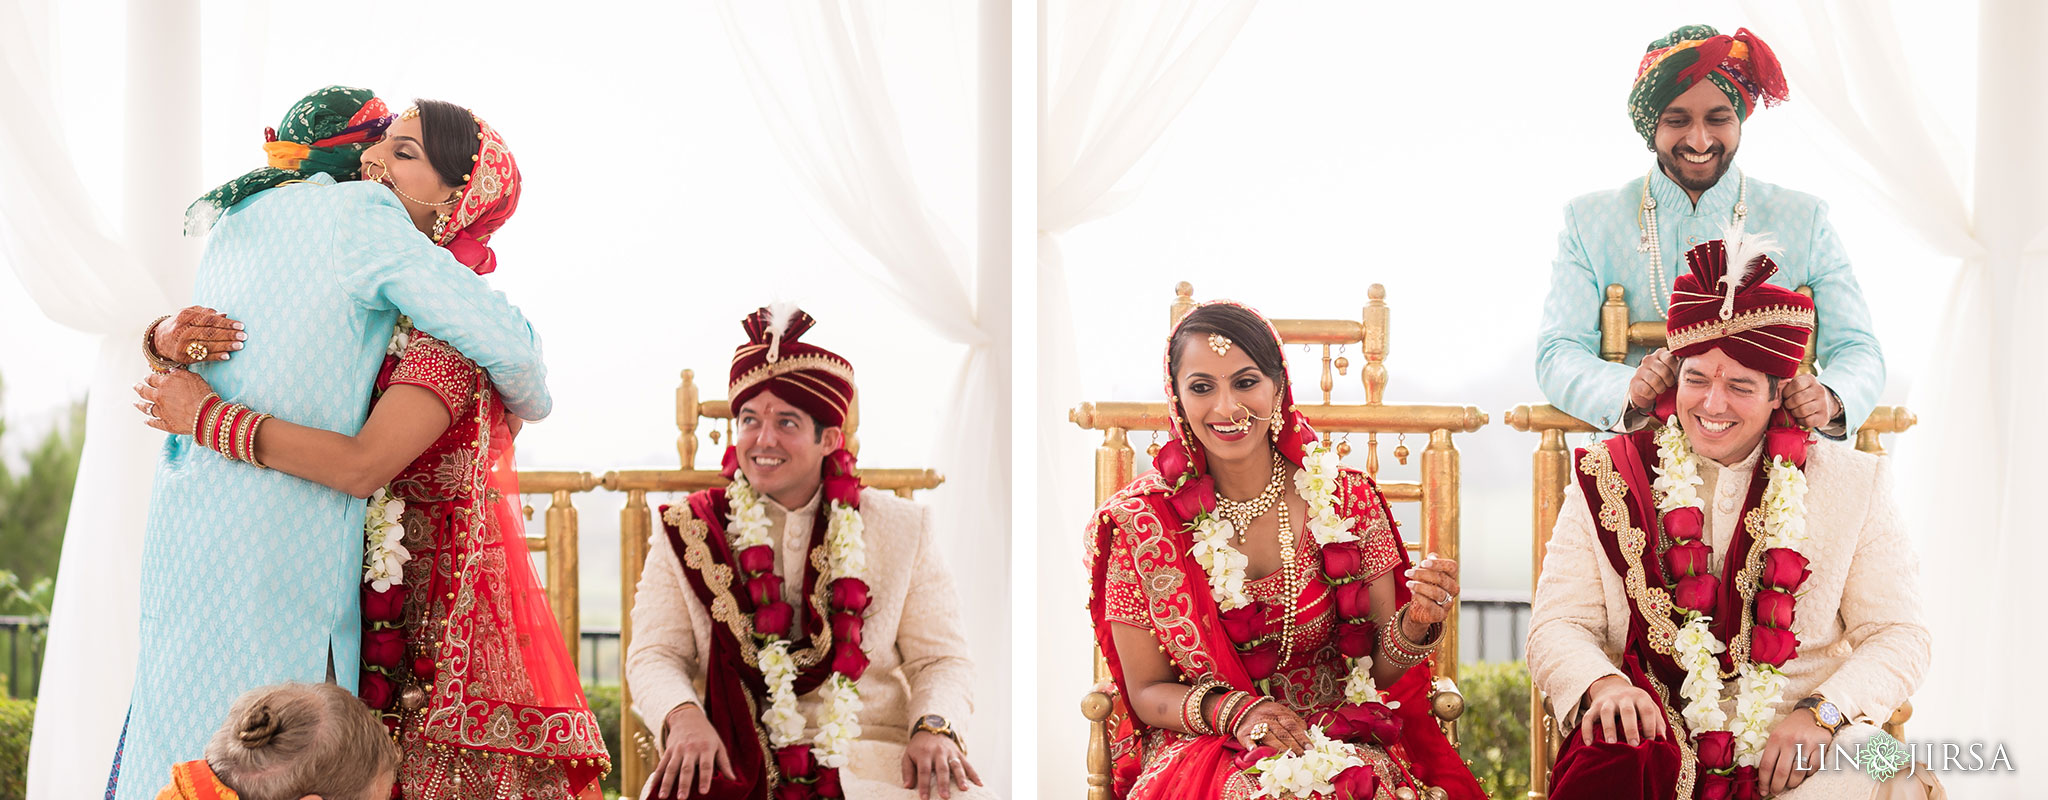 40 newport beach marriott hotel indian wedding ceremony photography